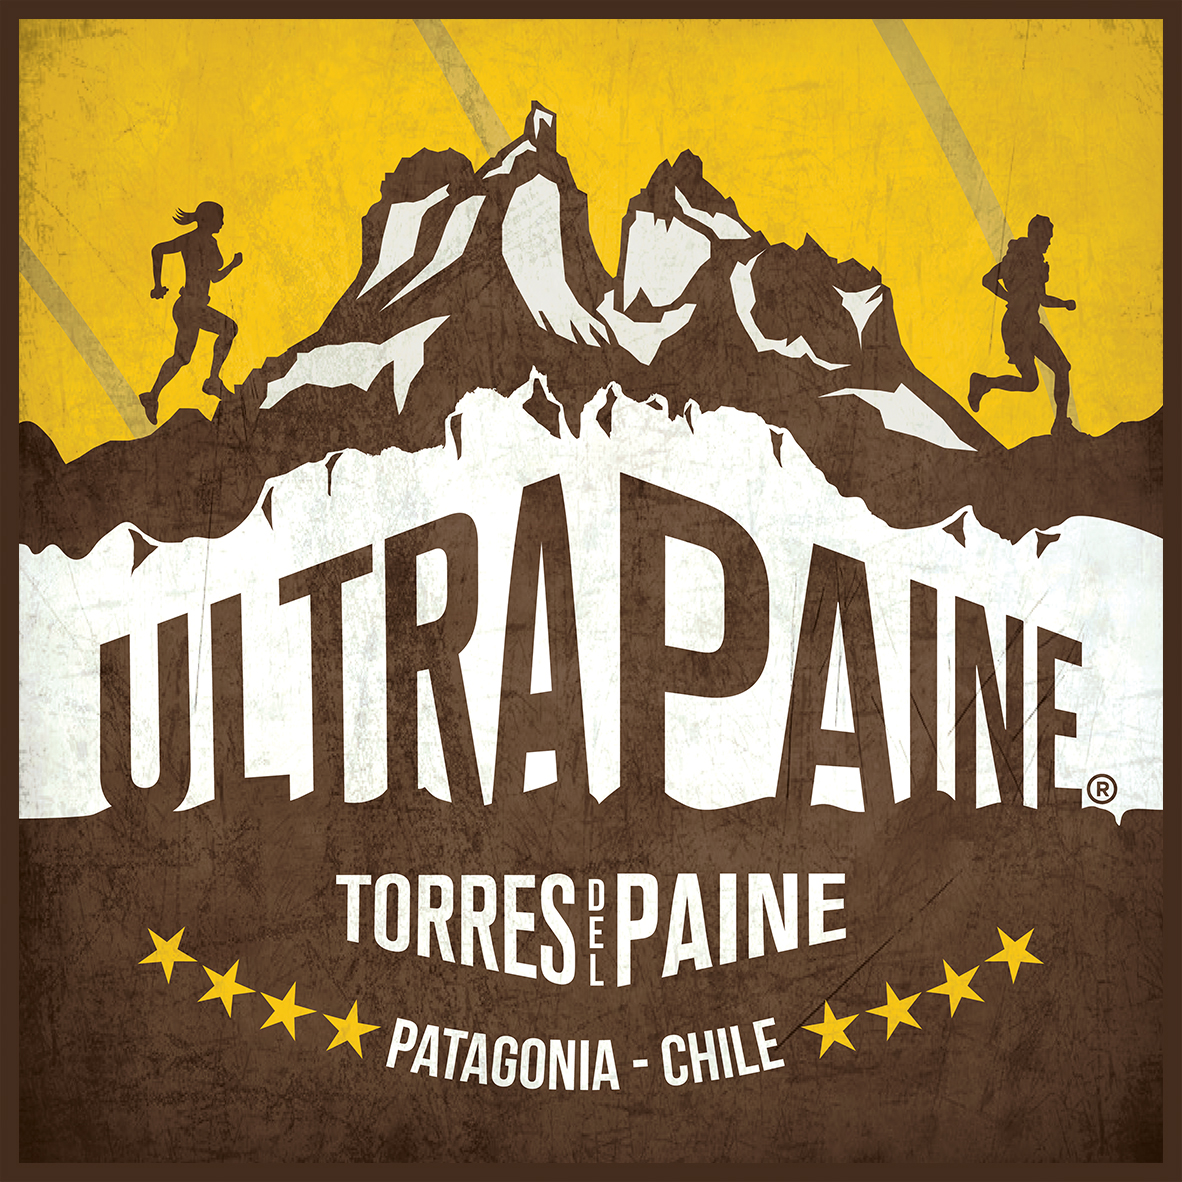 Ultra Paine Logo